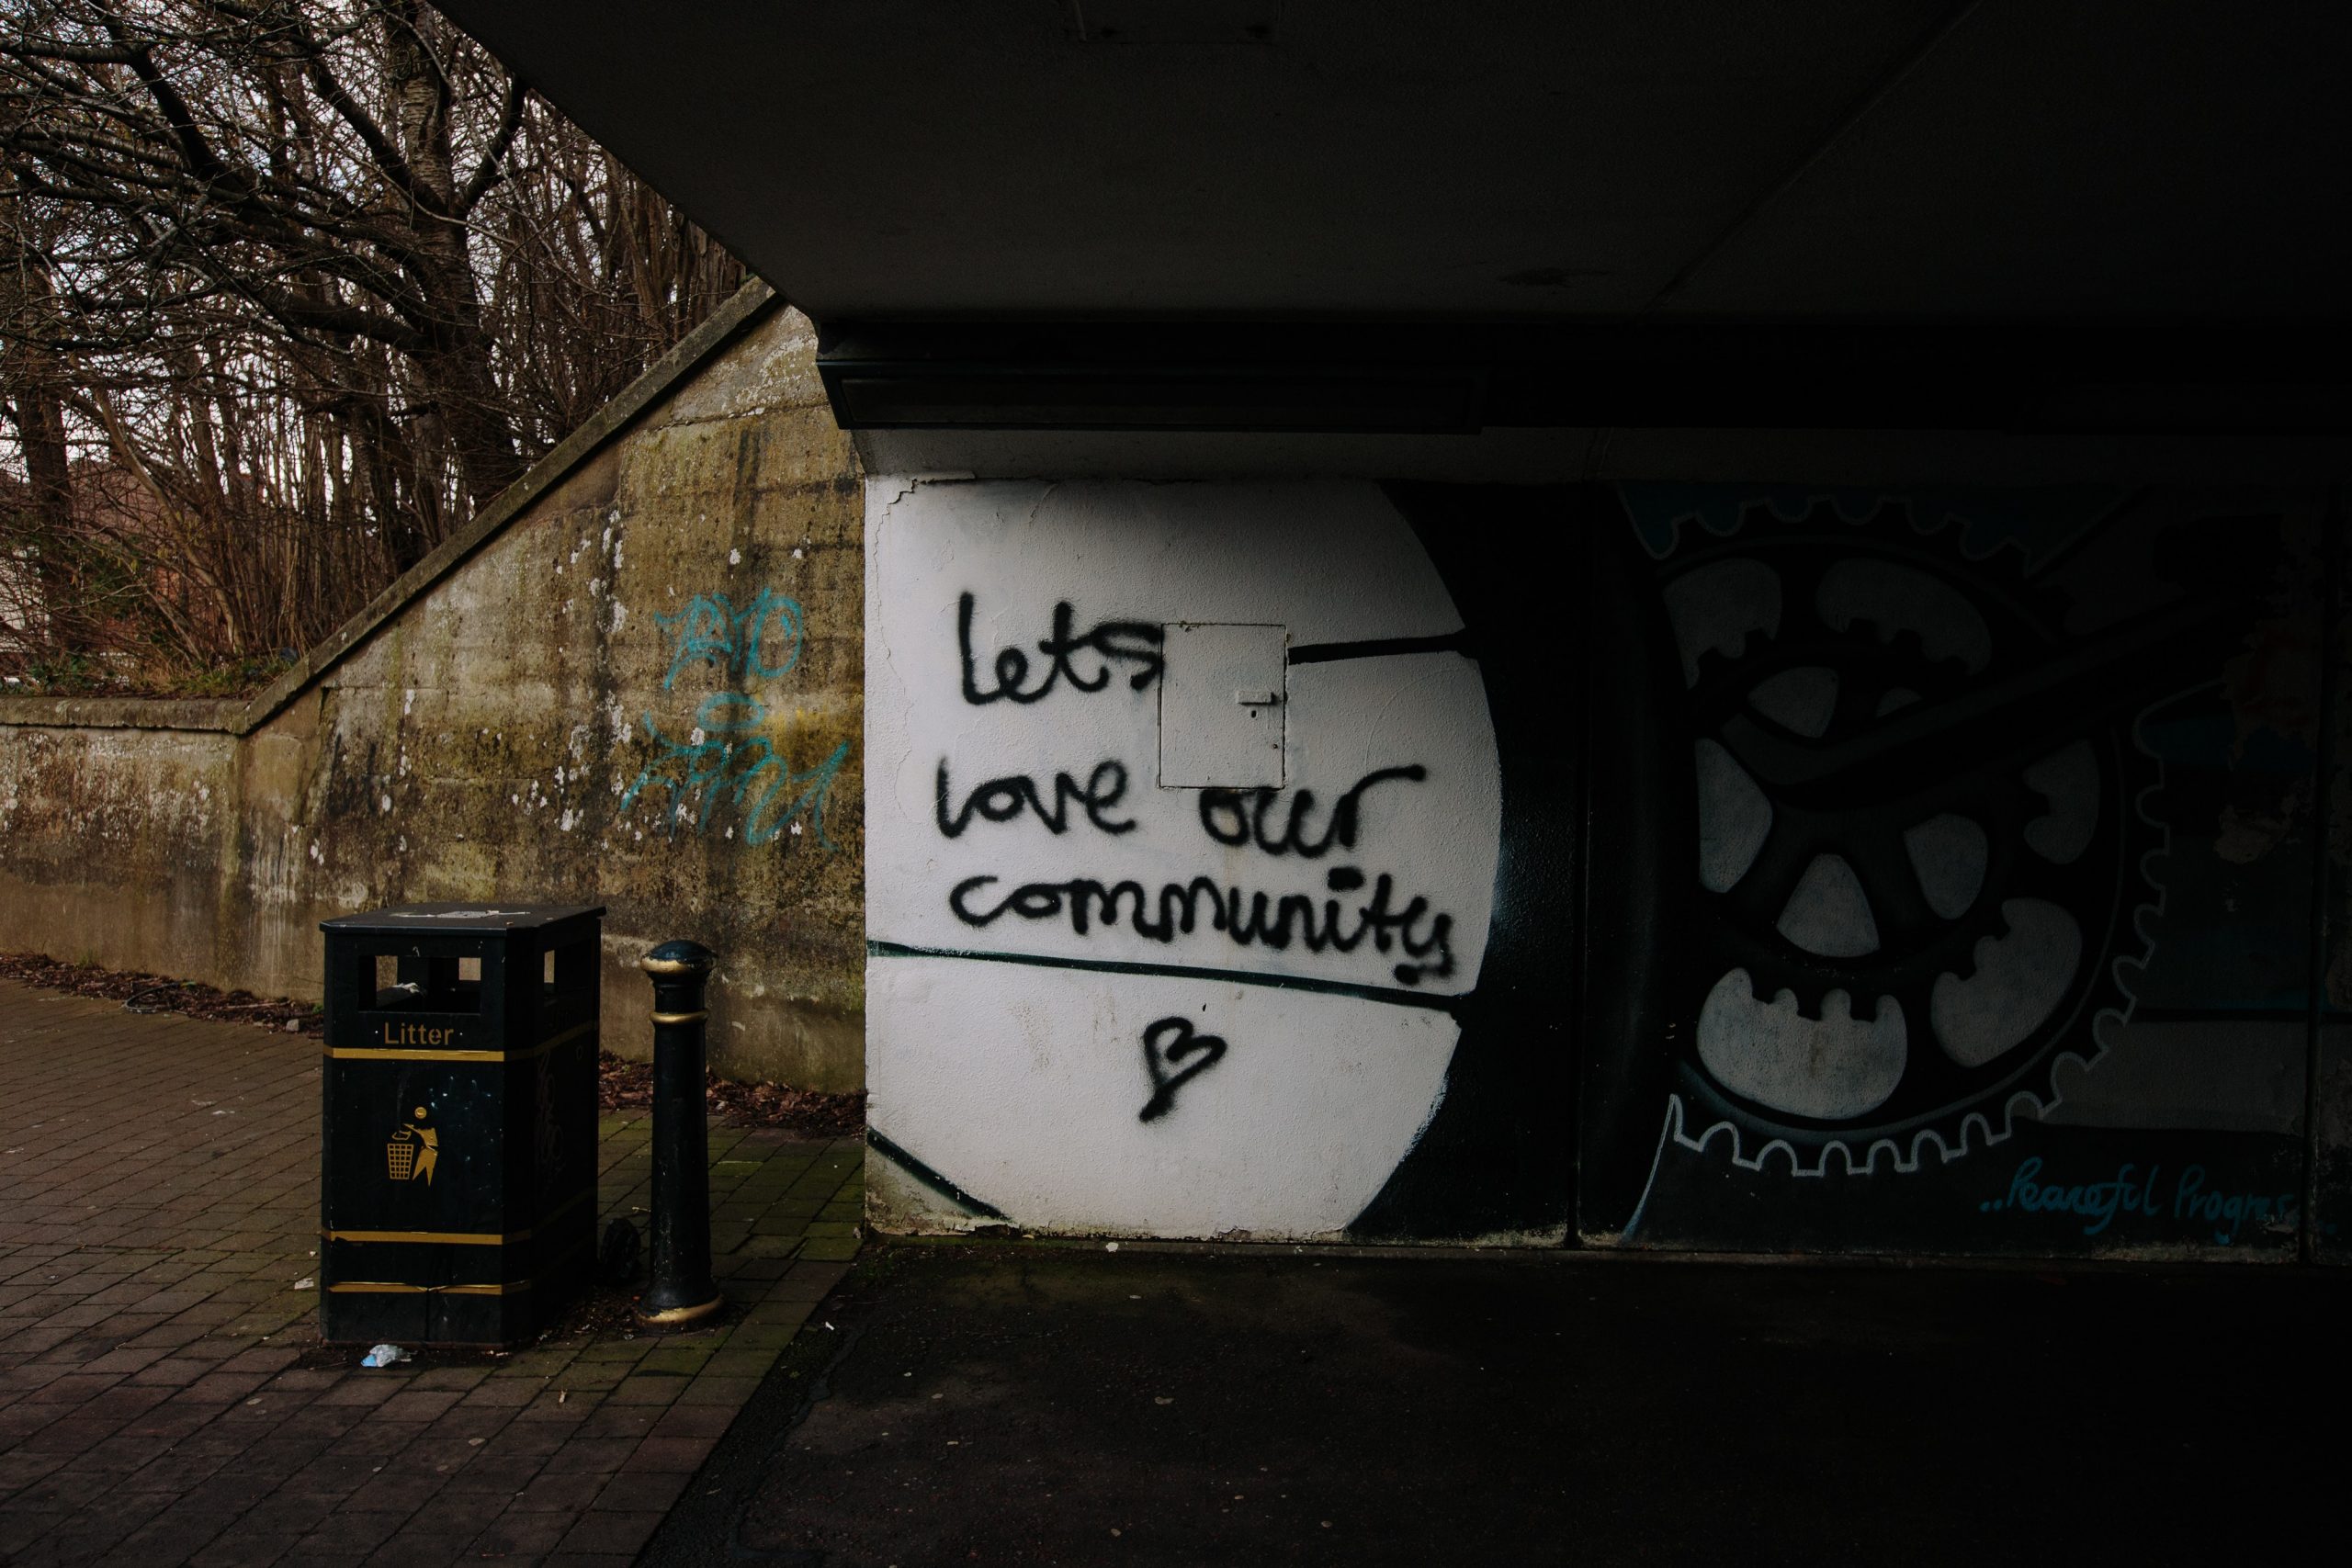 Let’s Love Our Community